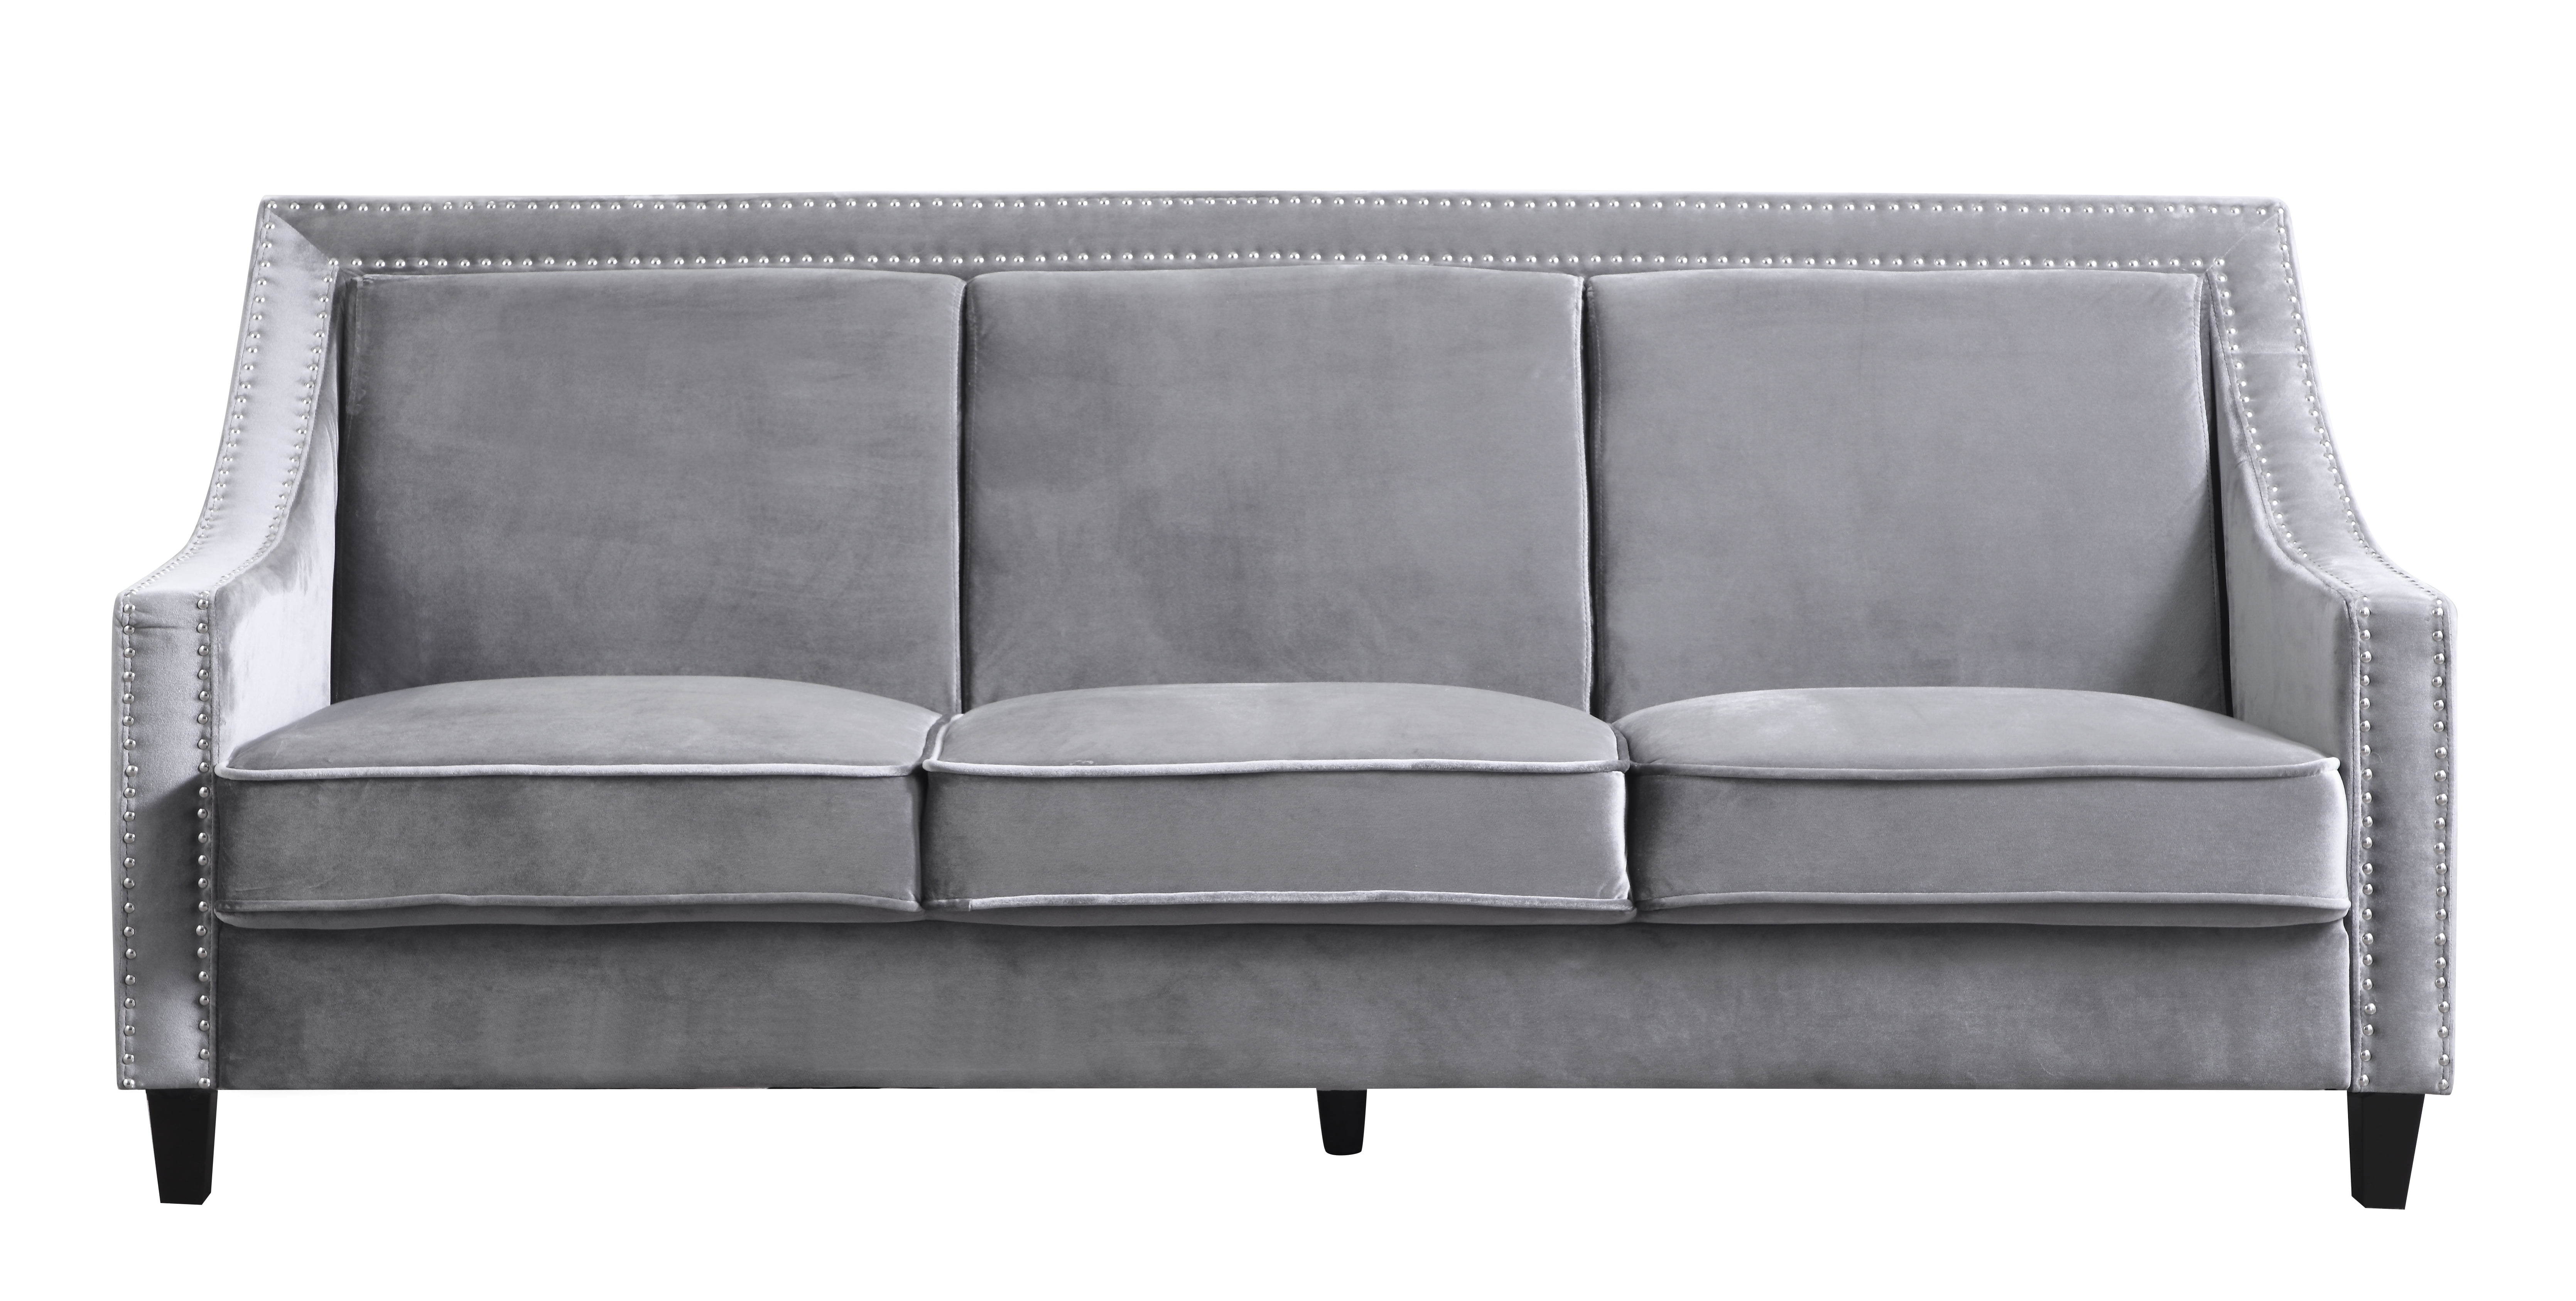 Fsa9001-us Modern Contemporary Kameron Sofa, Grey - 36.6 X 32.3 X 85 In.